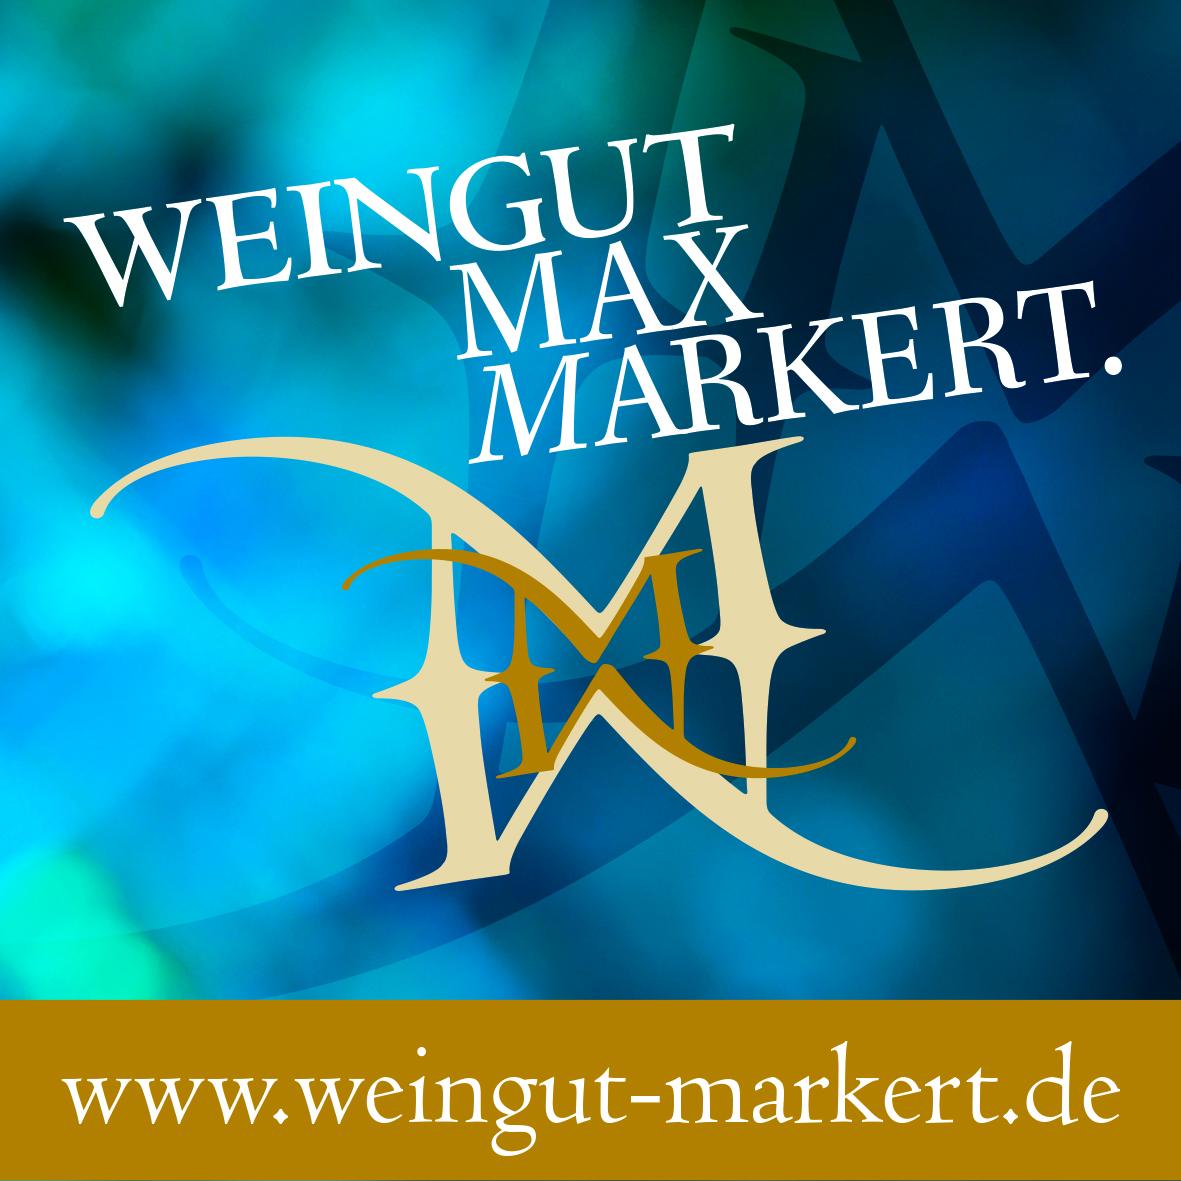 Restaurant "Weingut Max Markert" in  Eibelstadt